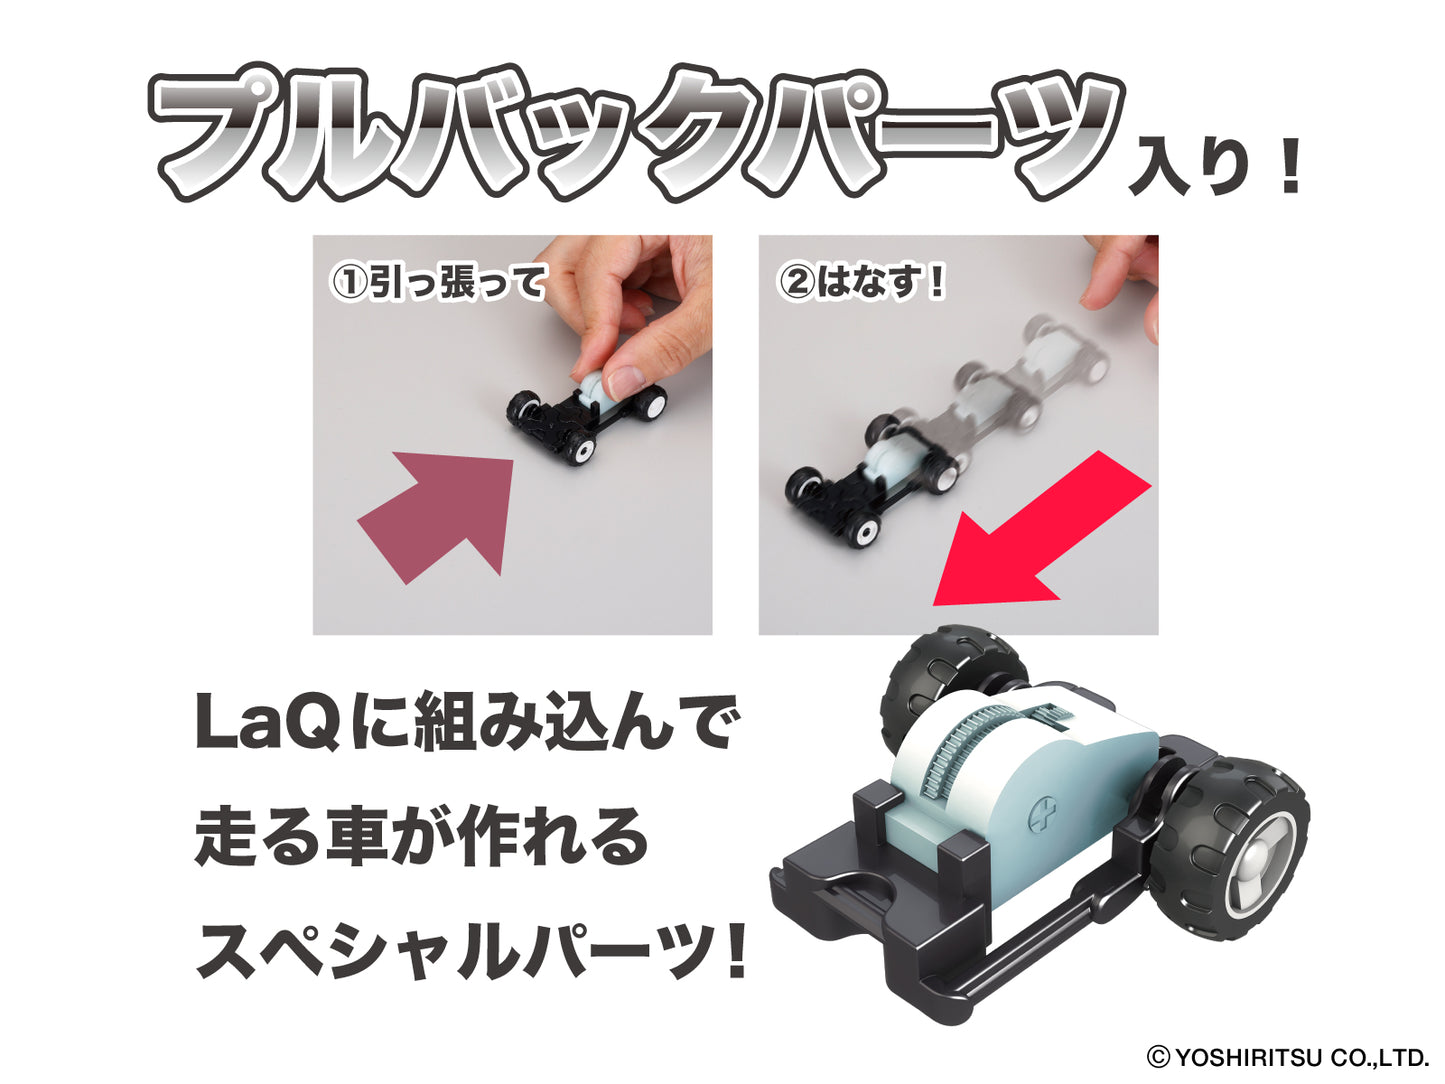 LaQ Hamacron Constructor Lightning Black Pull-back